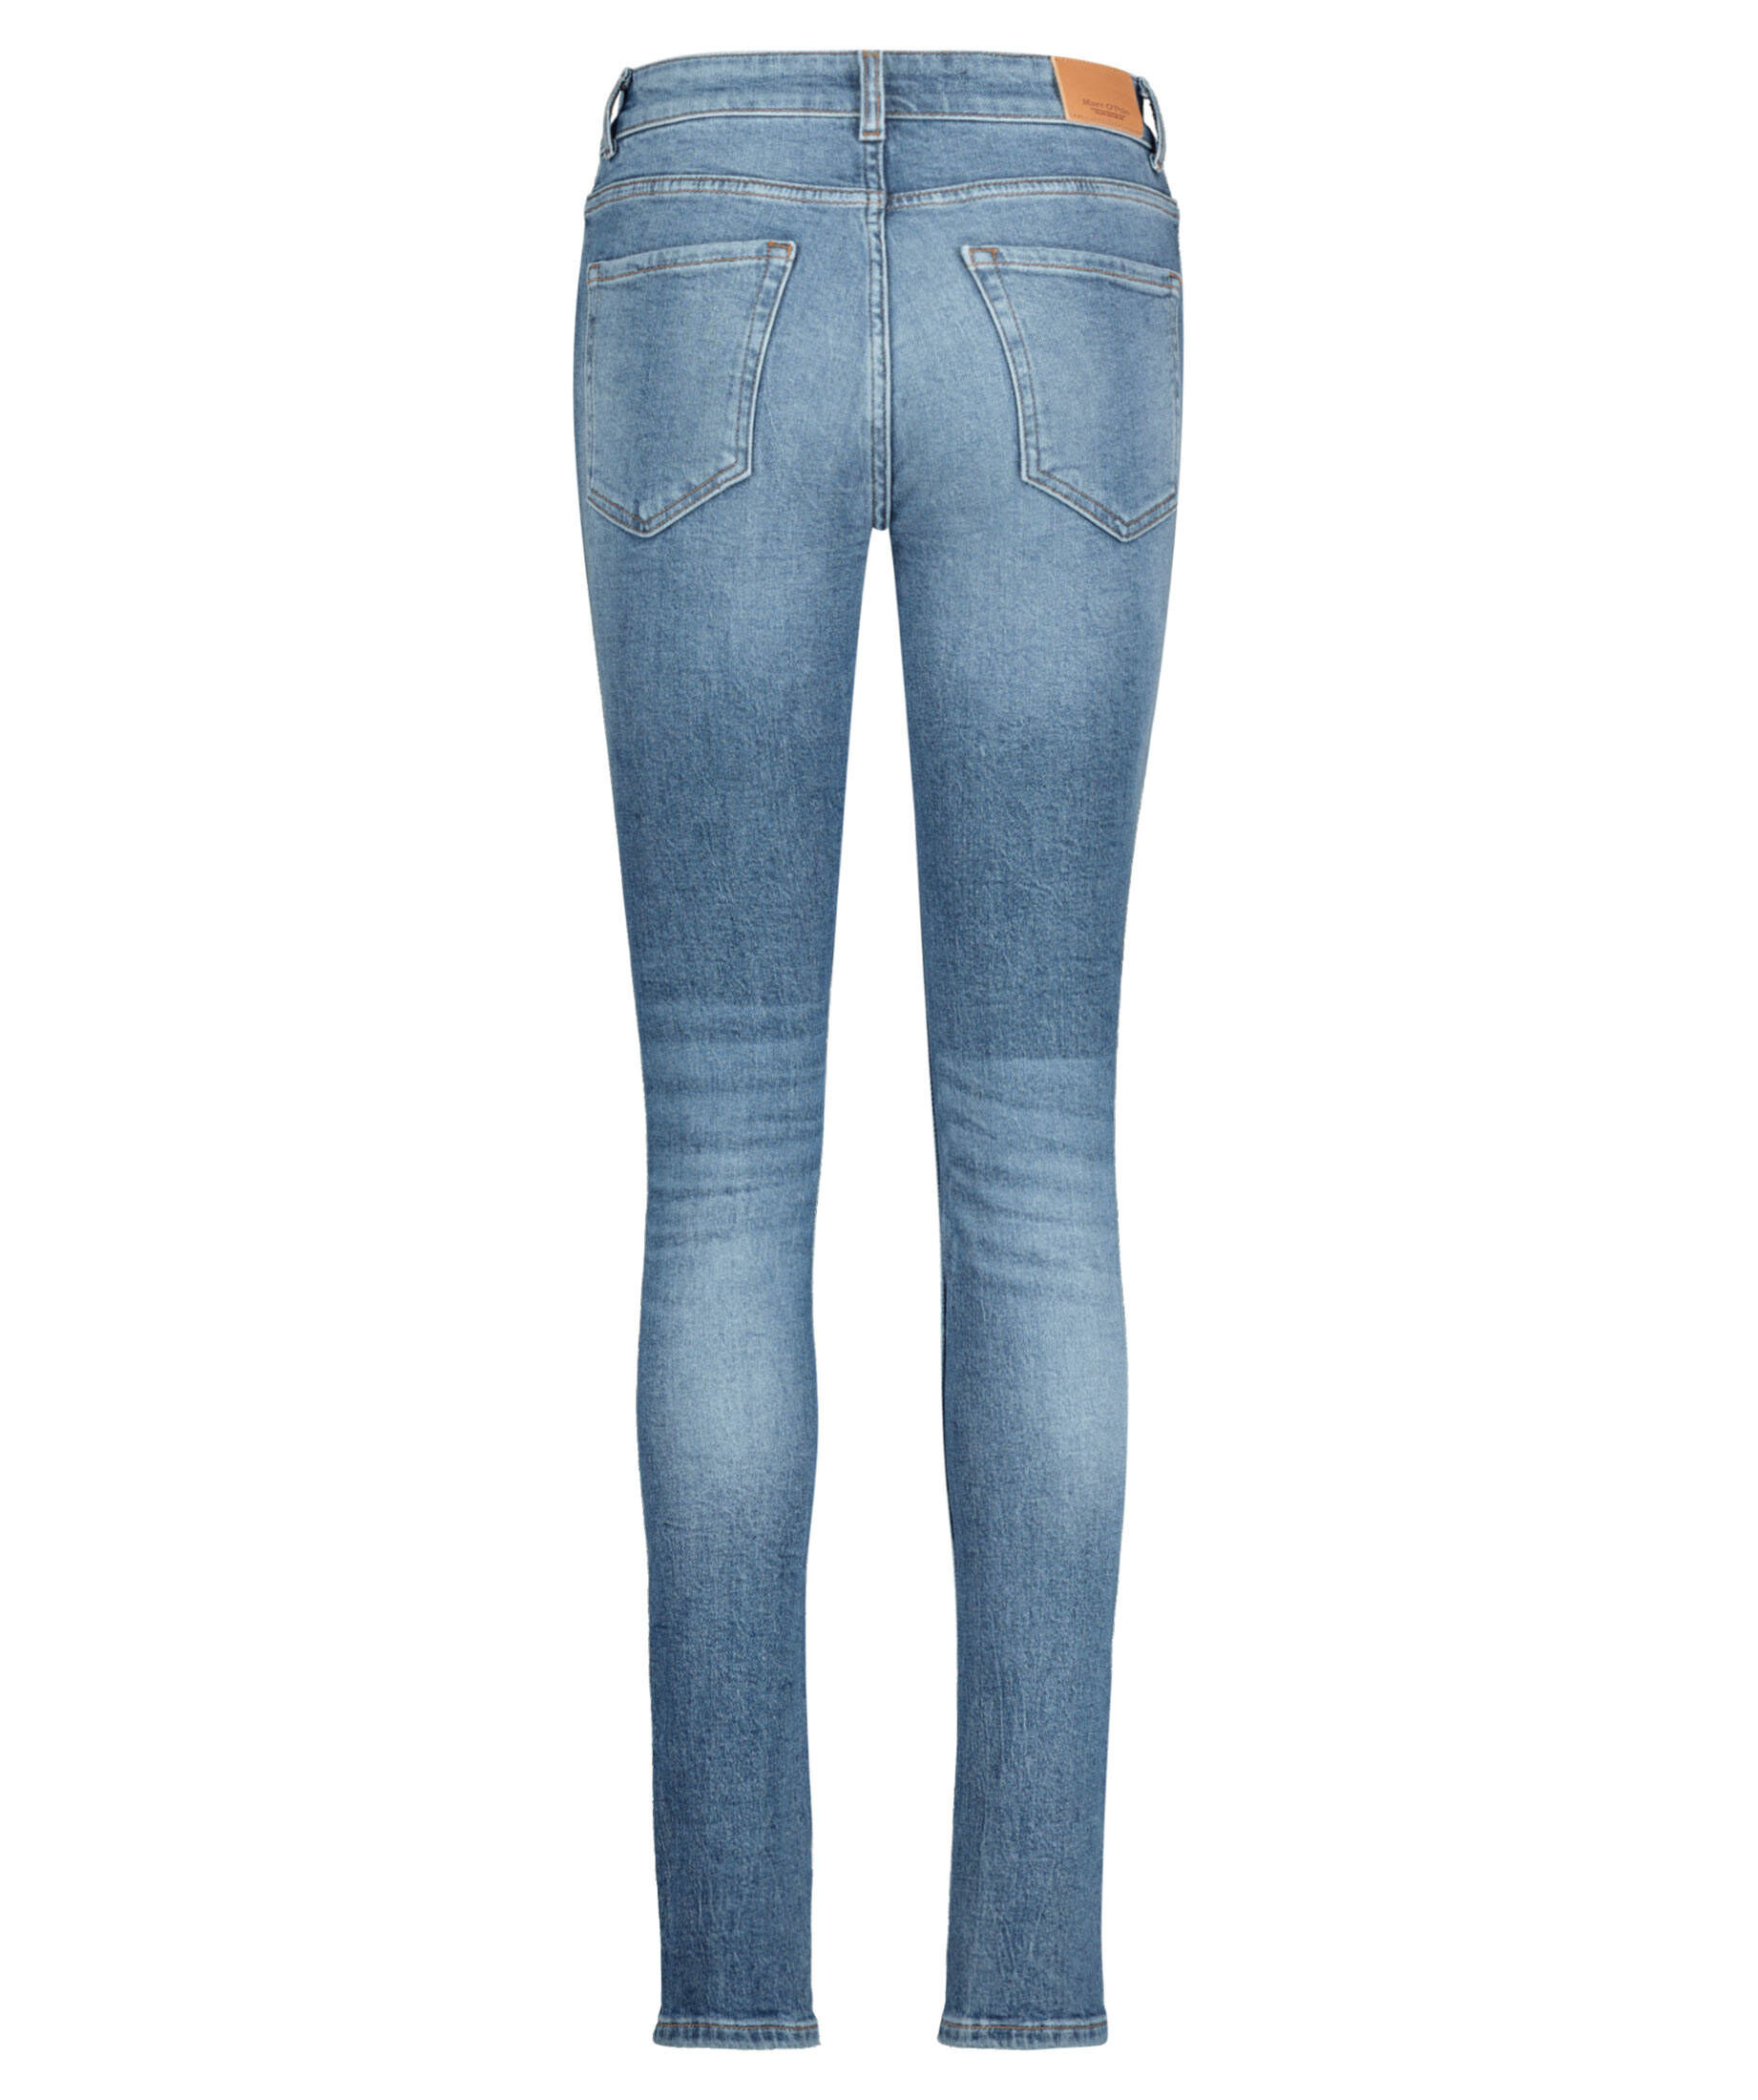 Marc O'Polo Damen Jeans High-Waist Fit kaufen